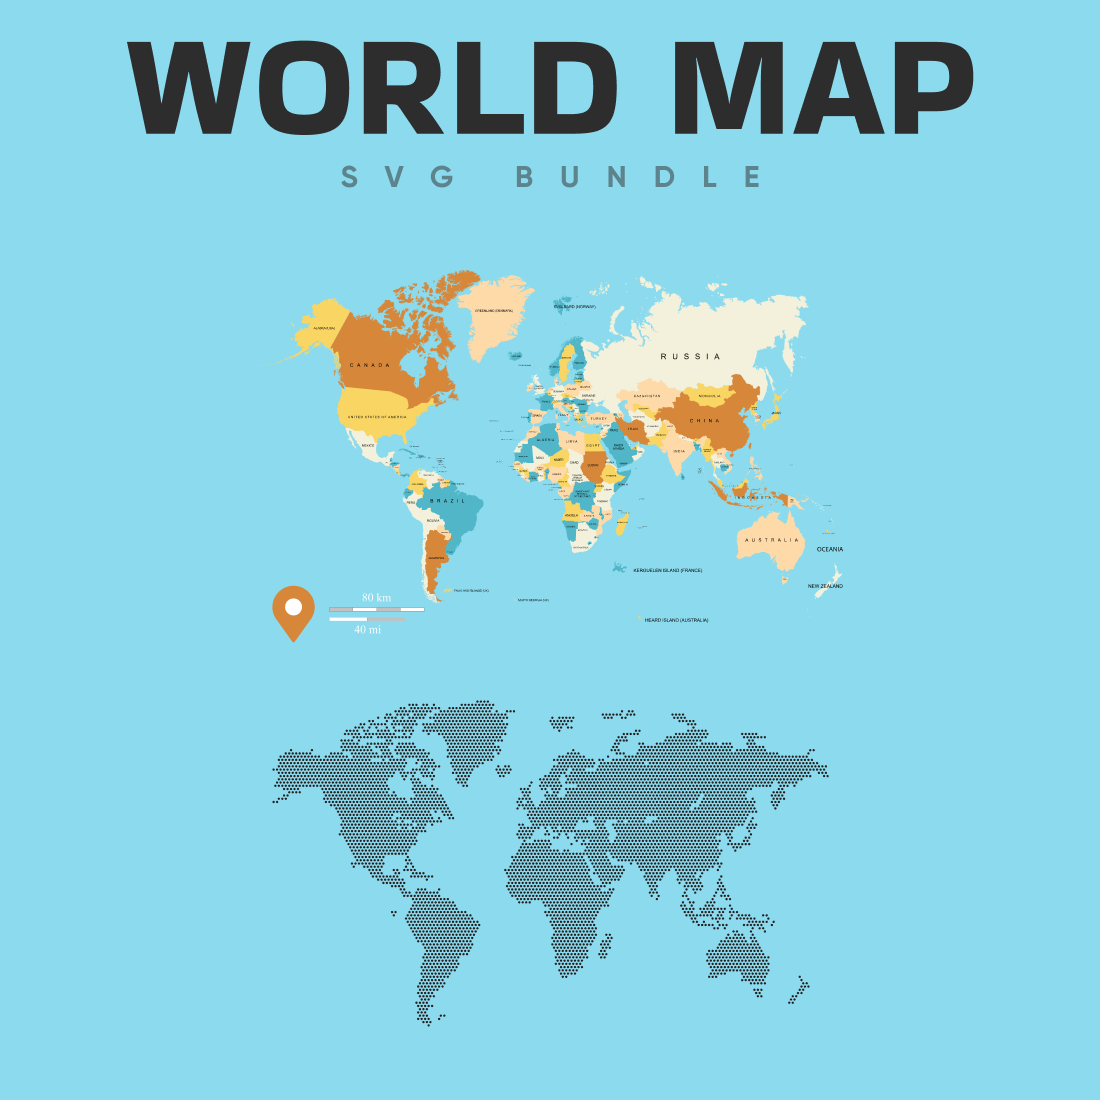 World map svg bundle.